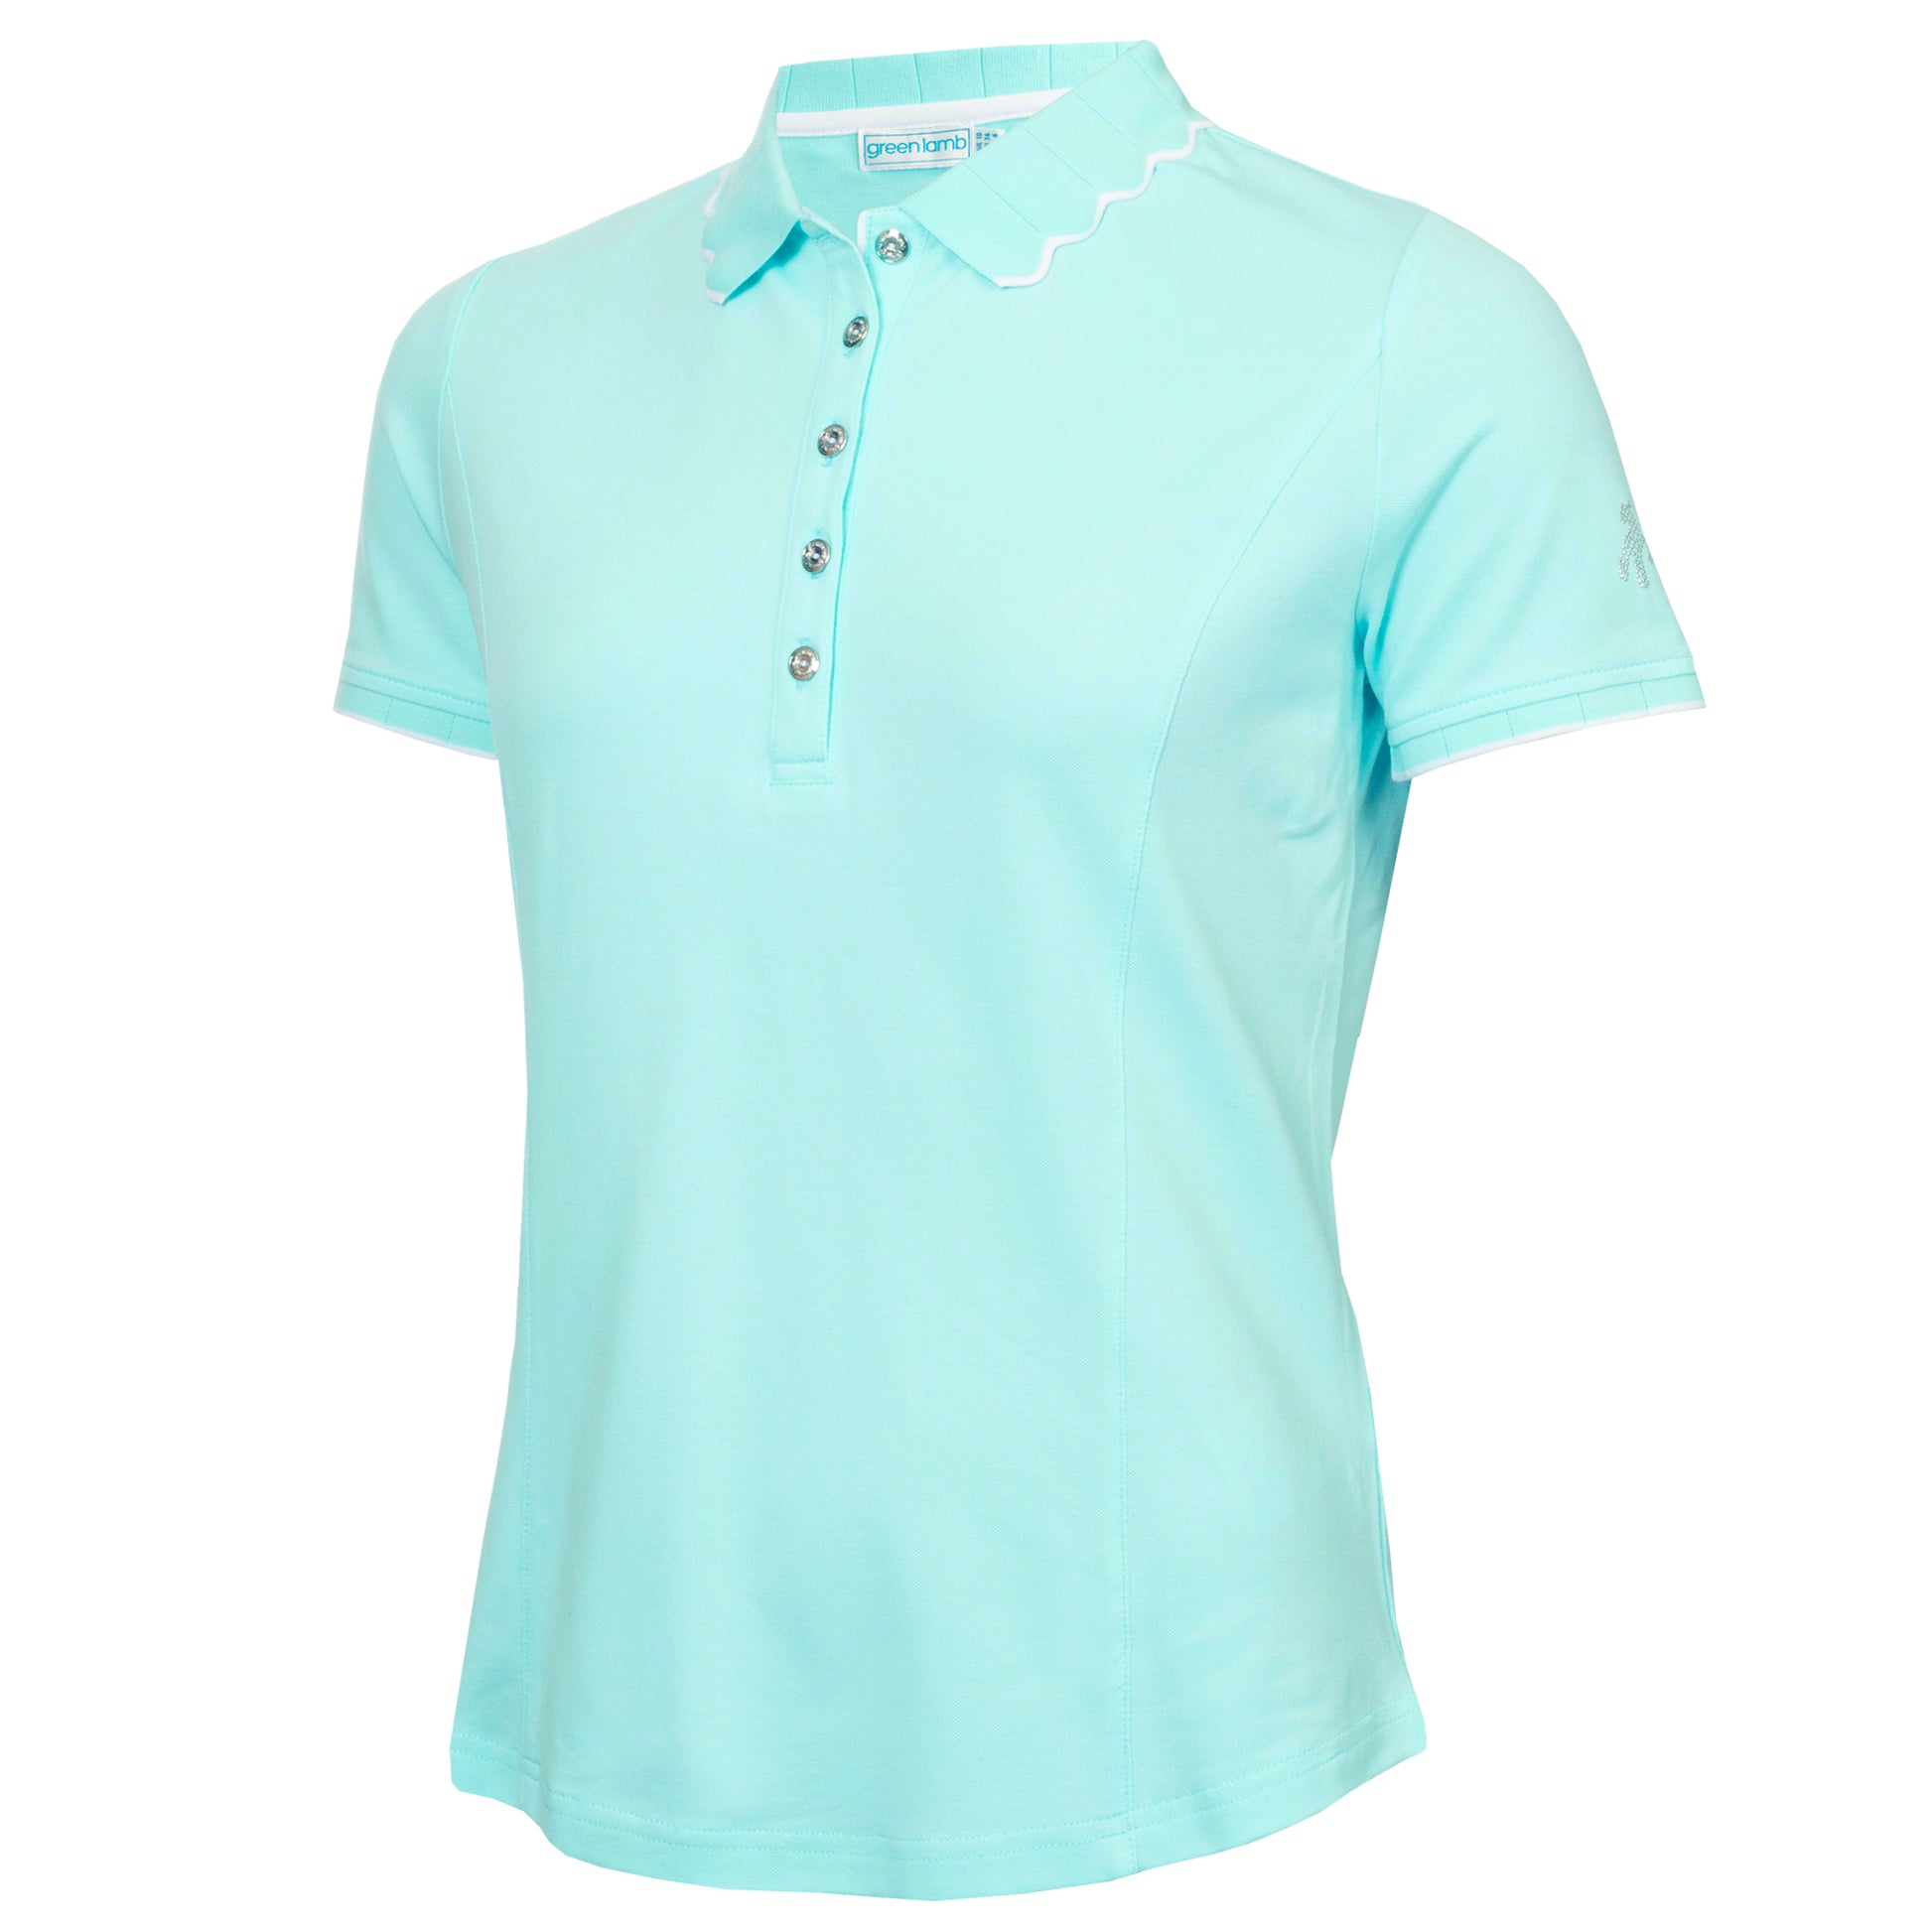 Green Lamb Ladies Short Sleeve Aqua Golf Polo with Scalloped Collar